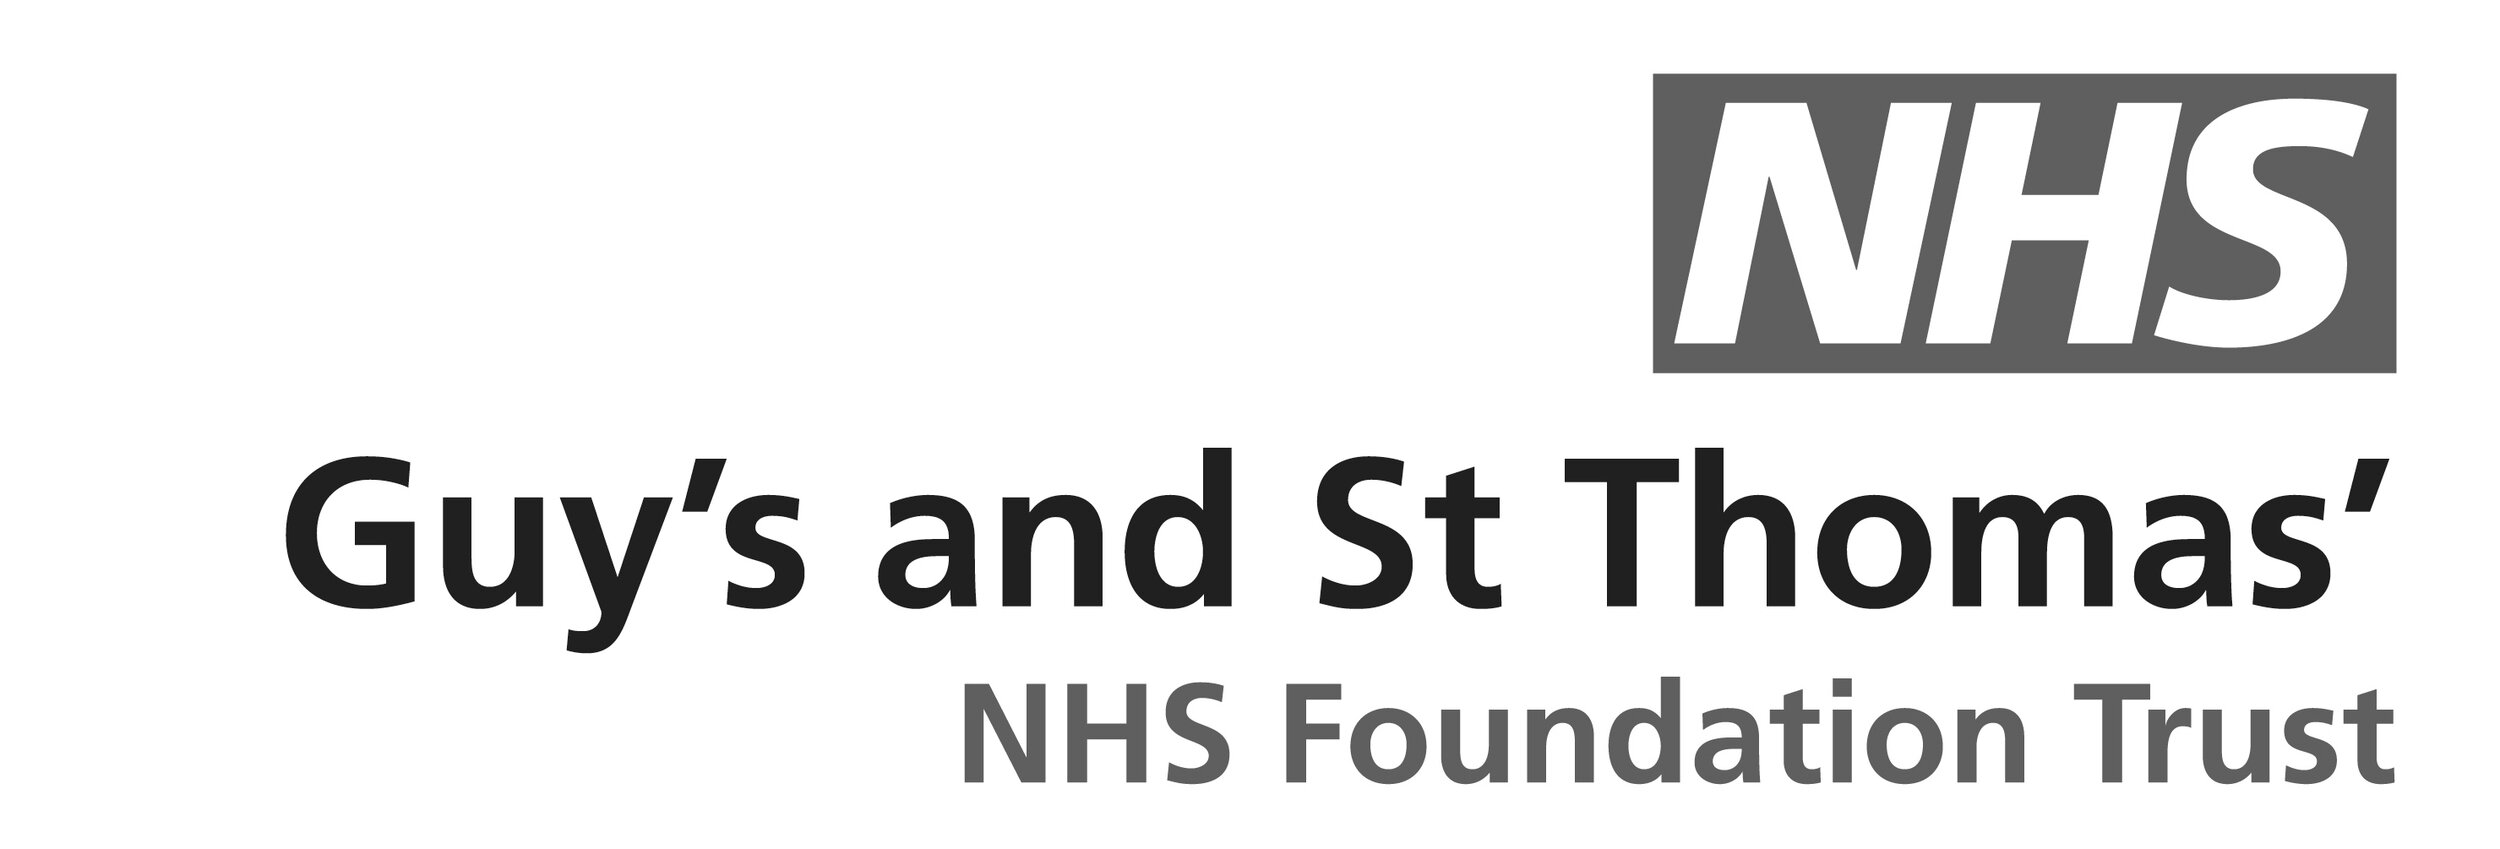 Guys-and-St-Thomas-NHS-Foundation-Trust-RGB-BLUE.jpeg